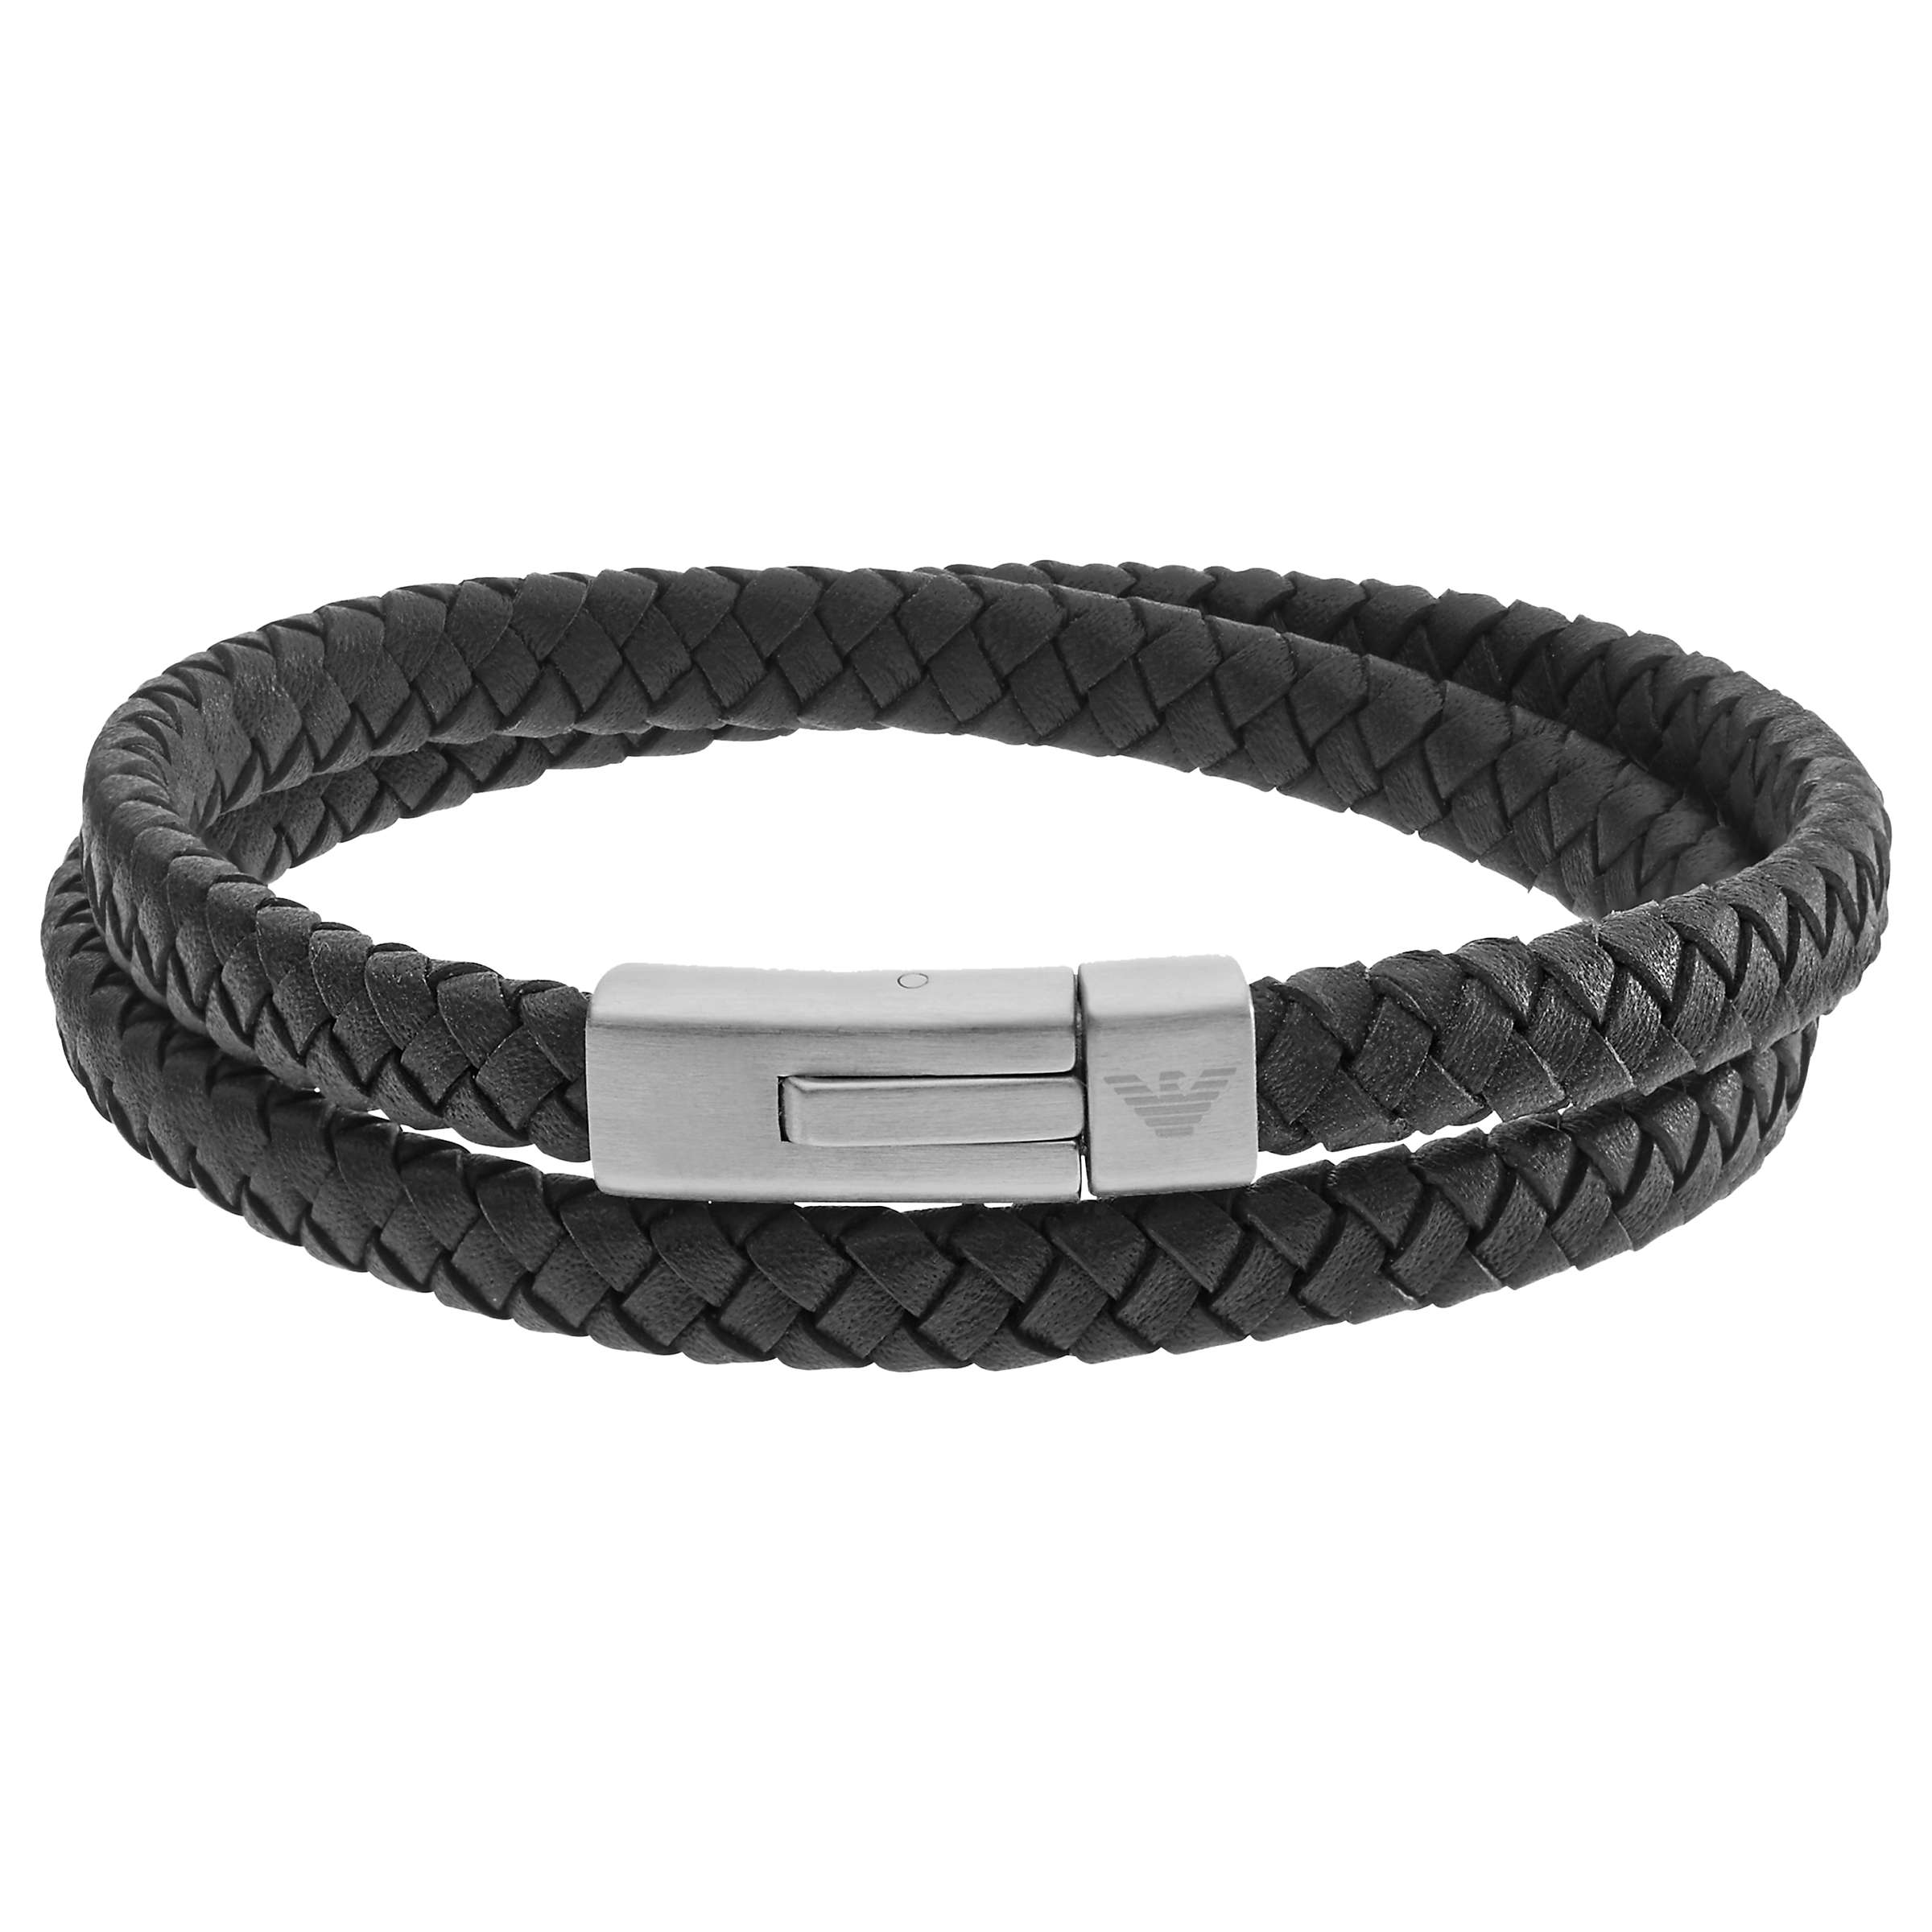 Buy Emporio Armani Men's Double Braided Leather Bracelet, Black/Silver Online at johnlewis.com